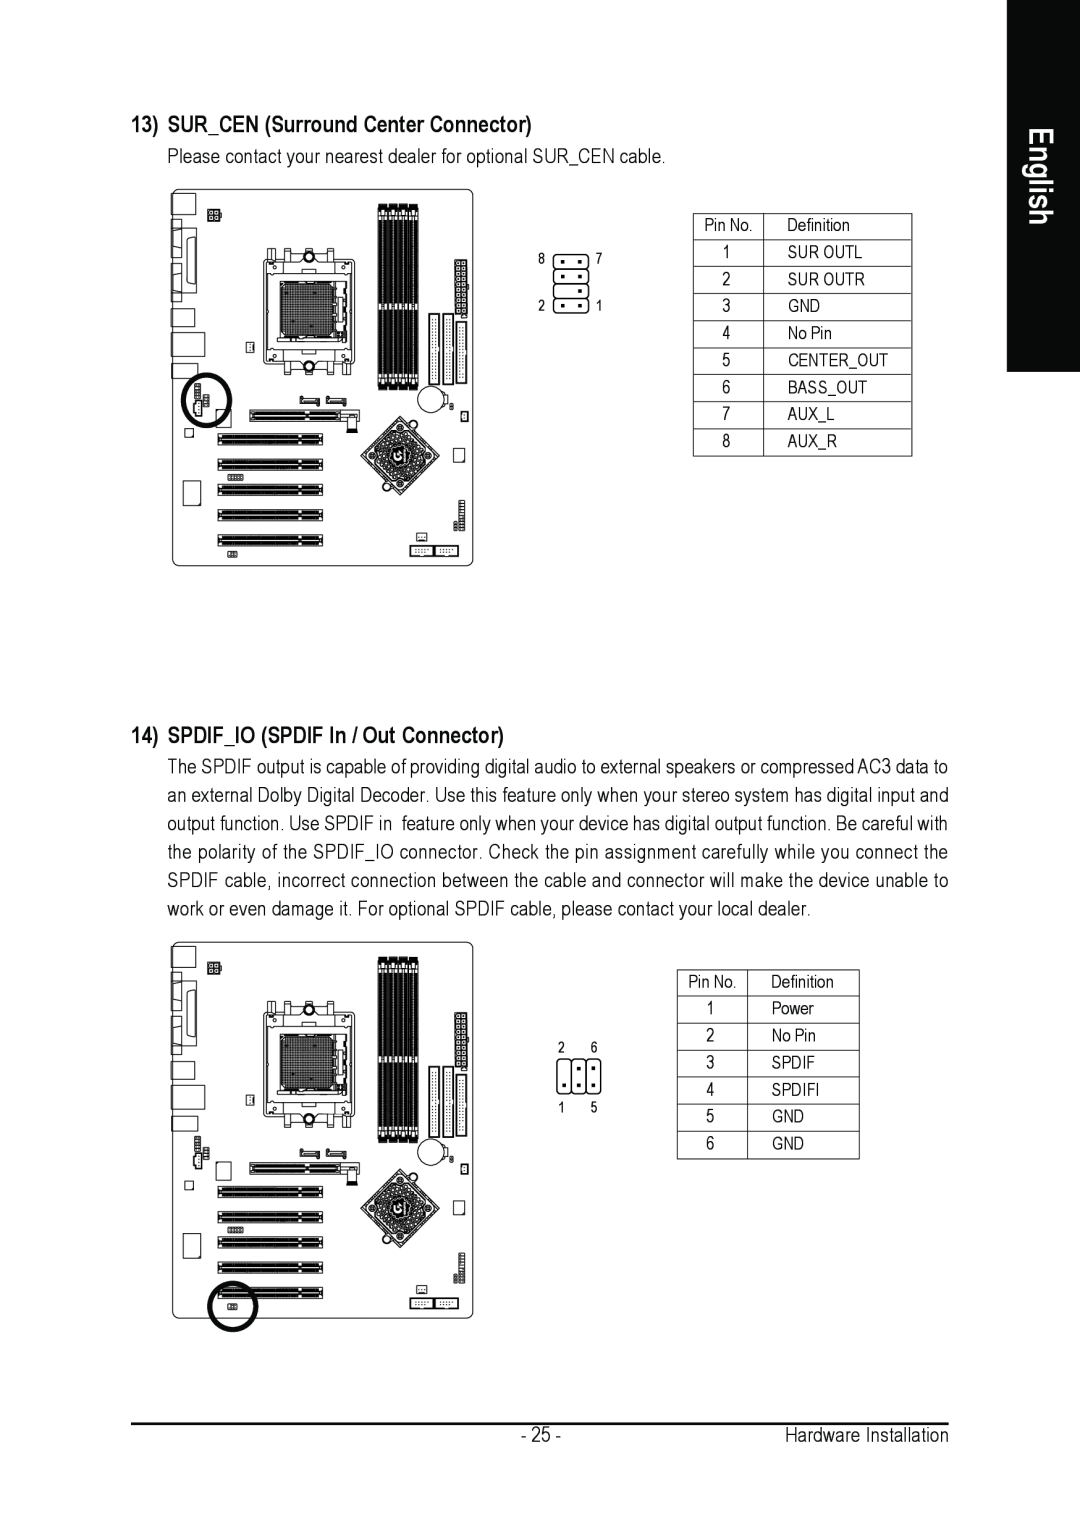 AMD GA-K8NSC-939 user manual SURCEN Surround Center Connector, SPDIFIO SPDIF In / Out Connector, English 